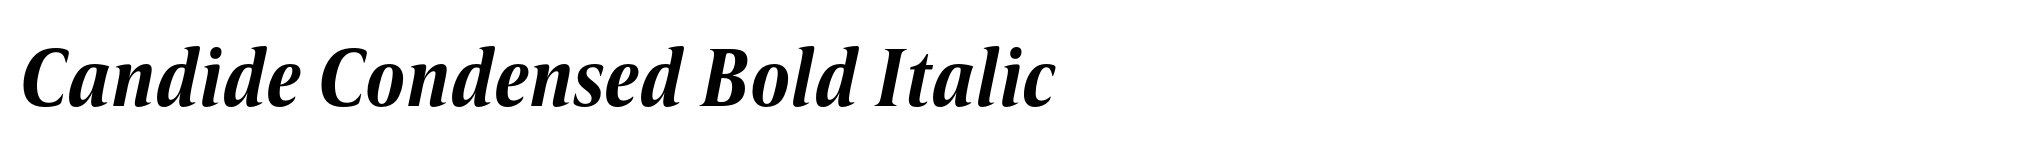 Candide Condensed Bold Italic image